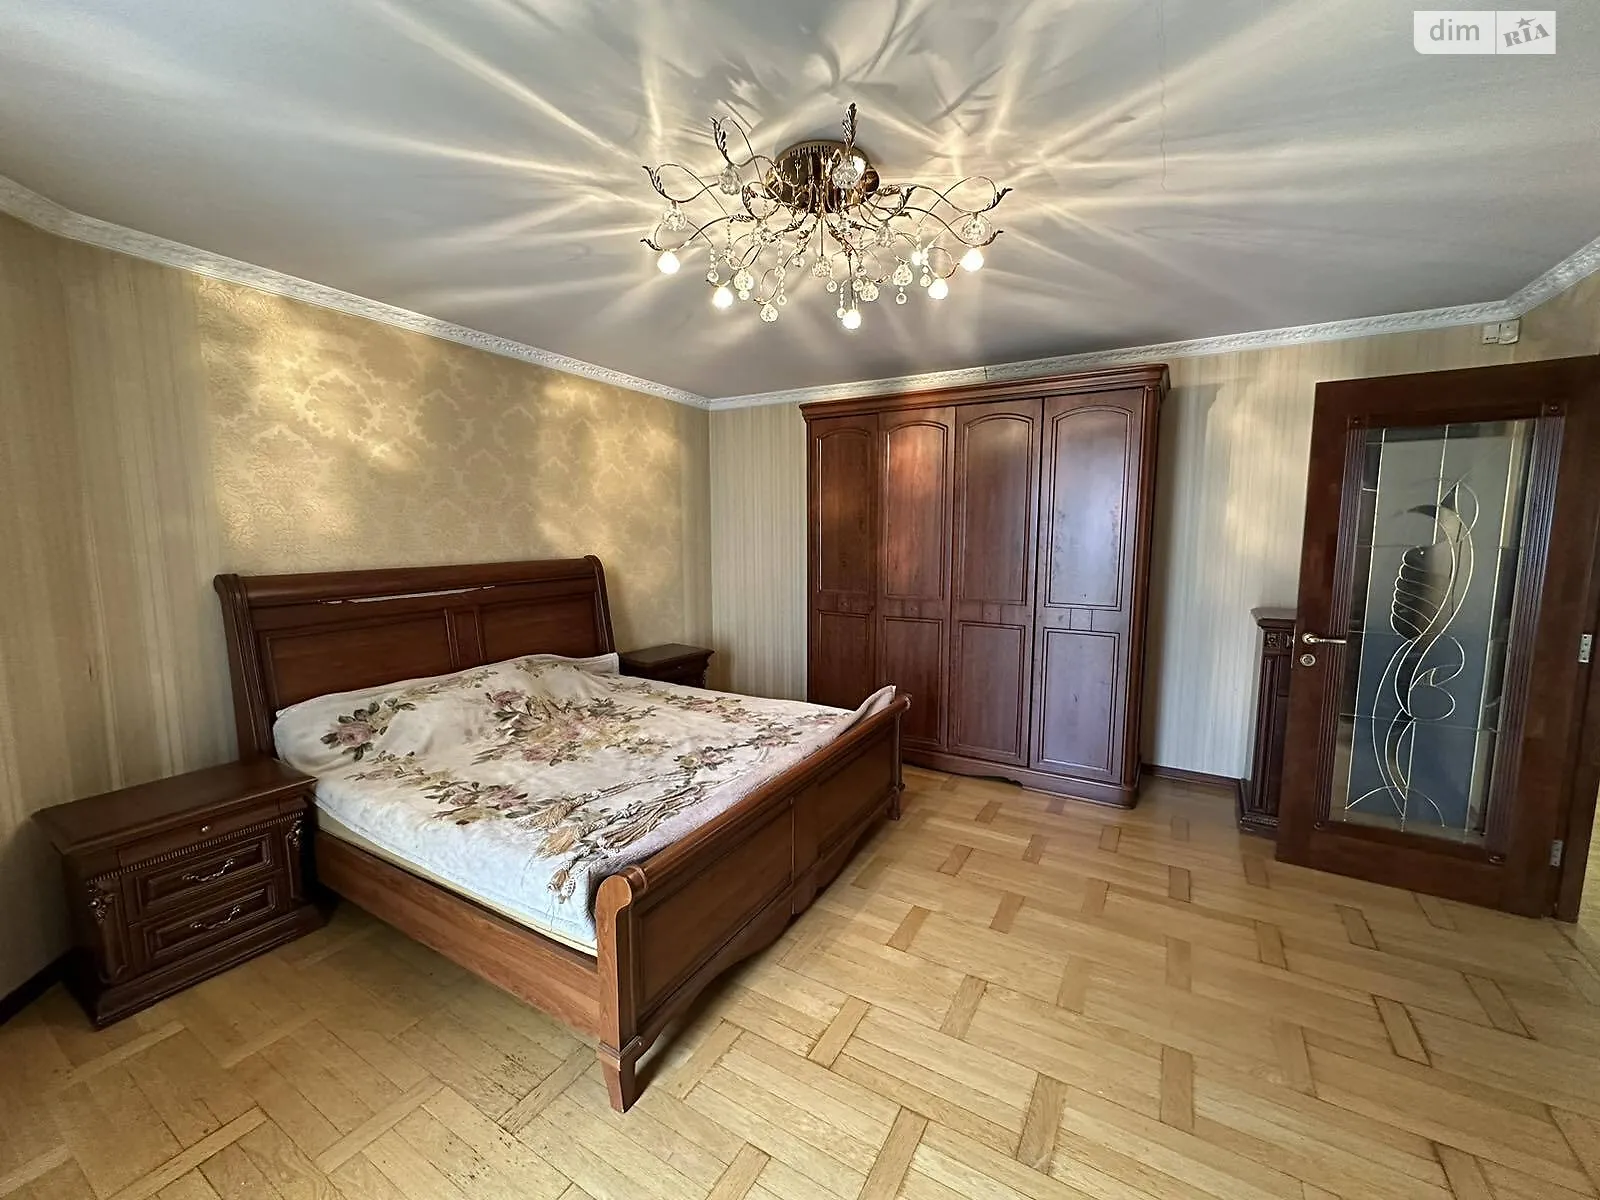 Сдается в аренду 5-комнатная квартира 250 кв. м в Львове, цена: 800 $ - фото 1